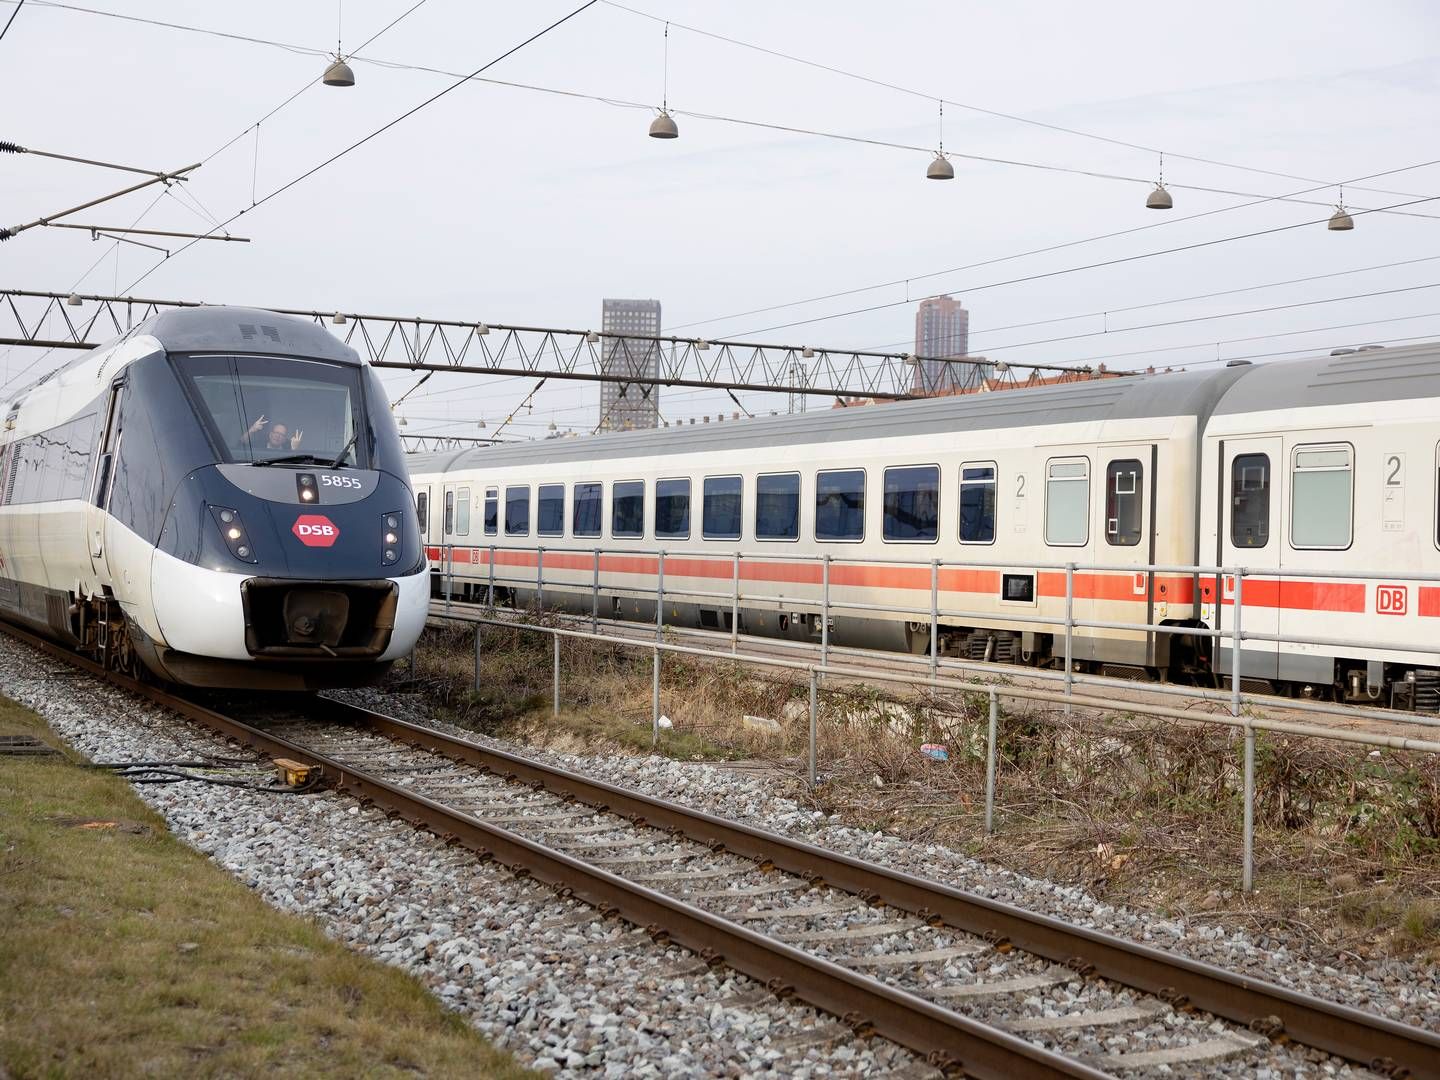 Det koster et stort milliardbeløb at elektrificere den danske jernbane. | Foto: Thomas Borberg/Ritzau Scanpix